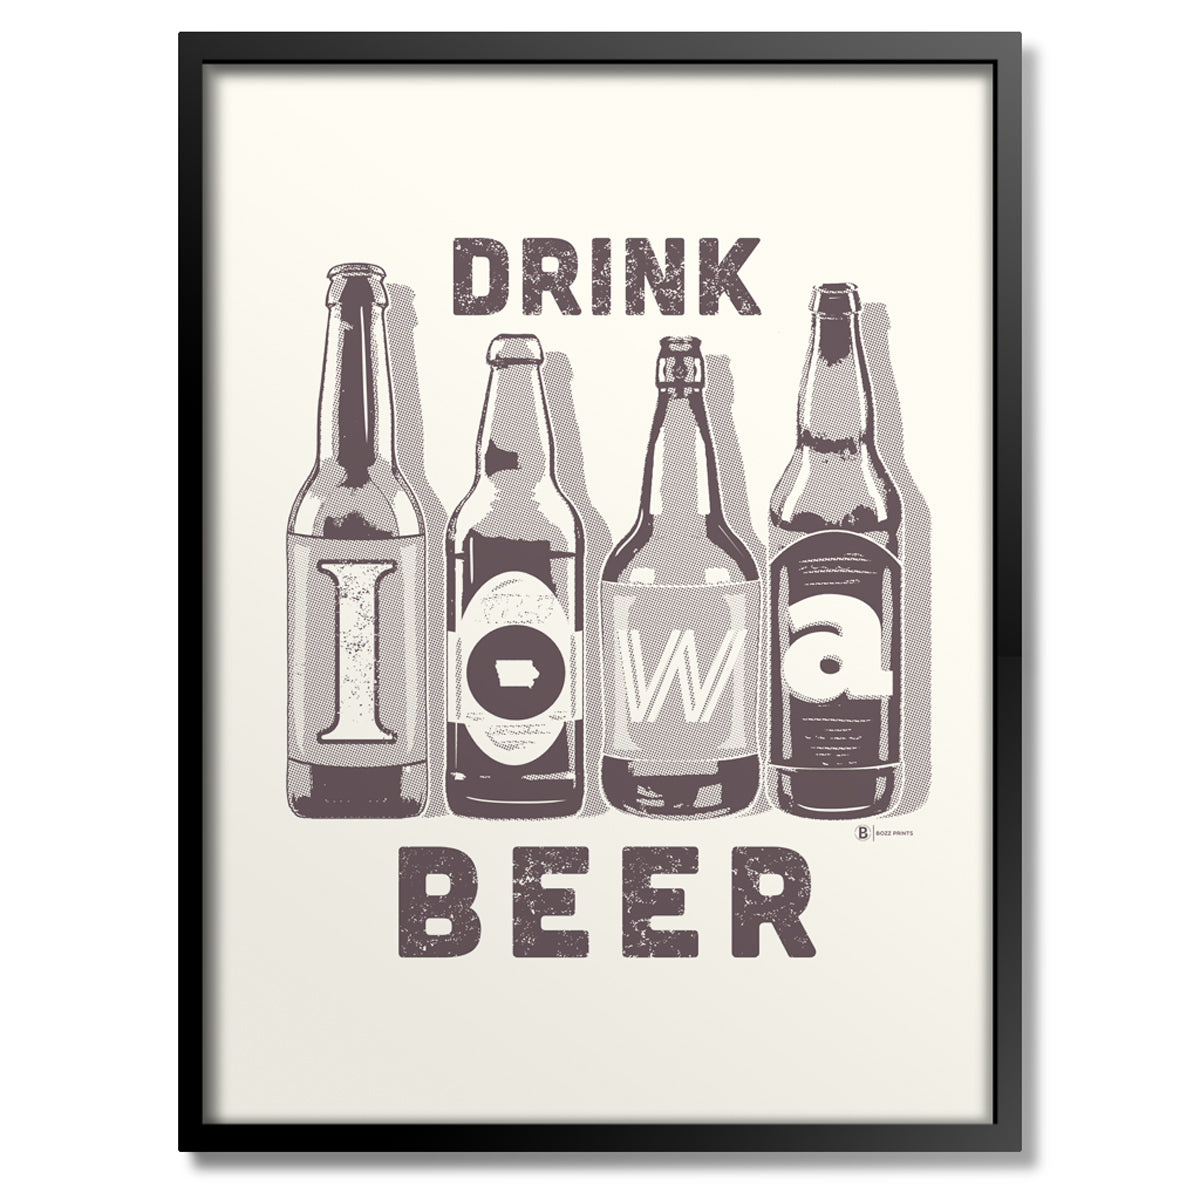 Drink Iowa Beer Print - Bozz Prints